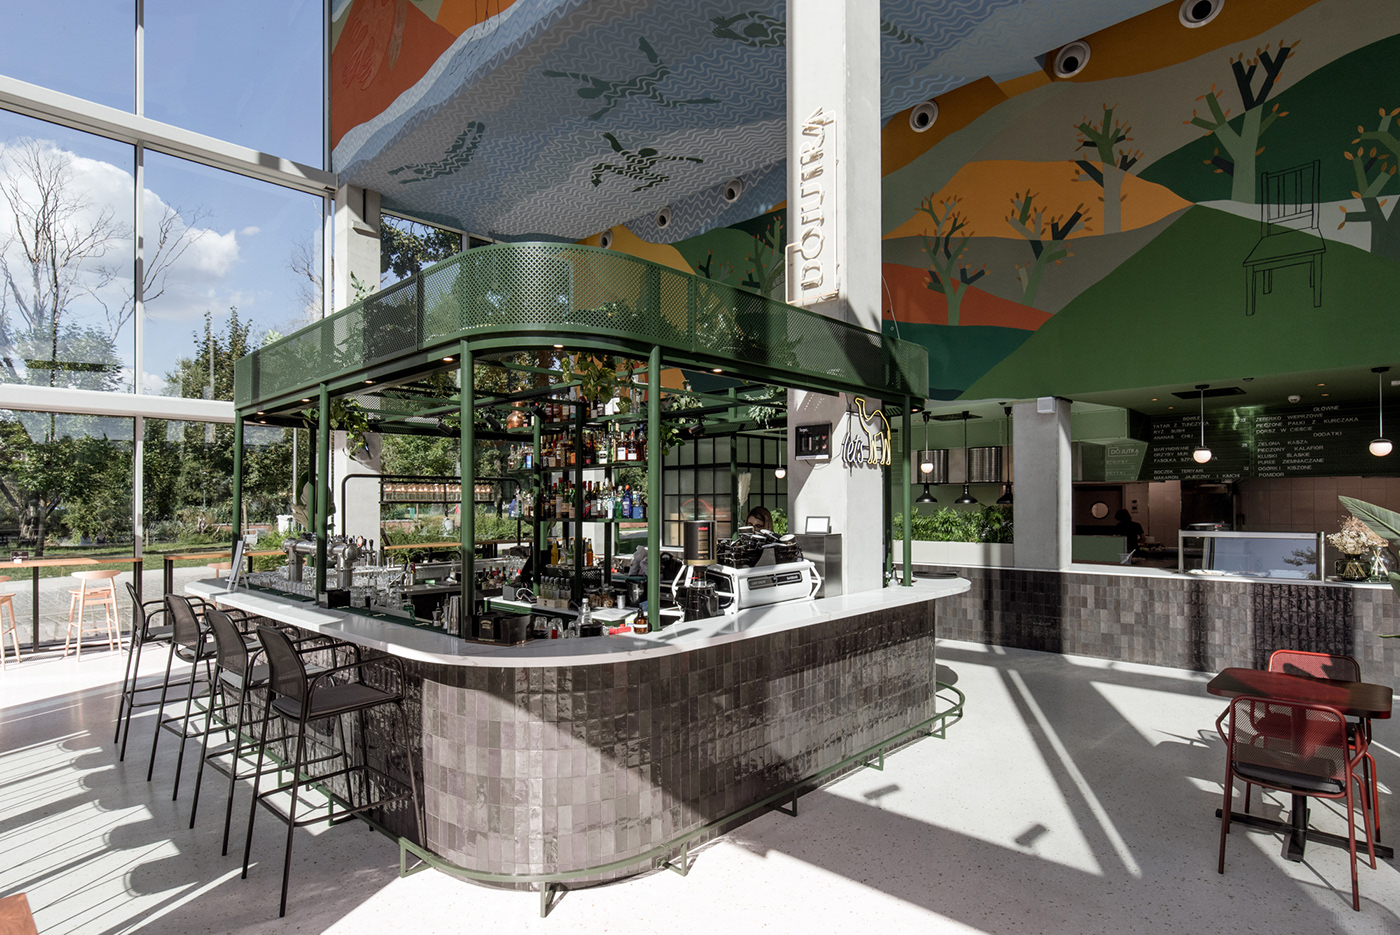 alicja biala gastronomy interior design  modelina modelina architekci Mural MVRDV poland restaurant wroclaw